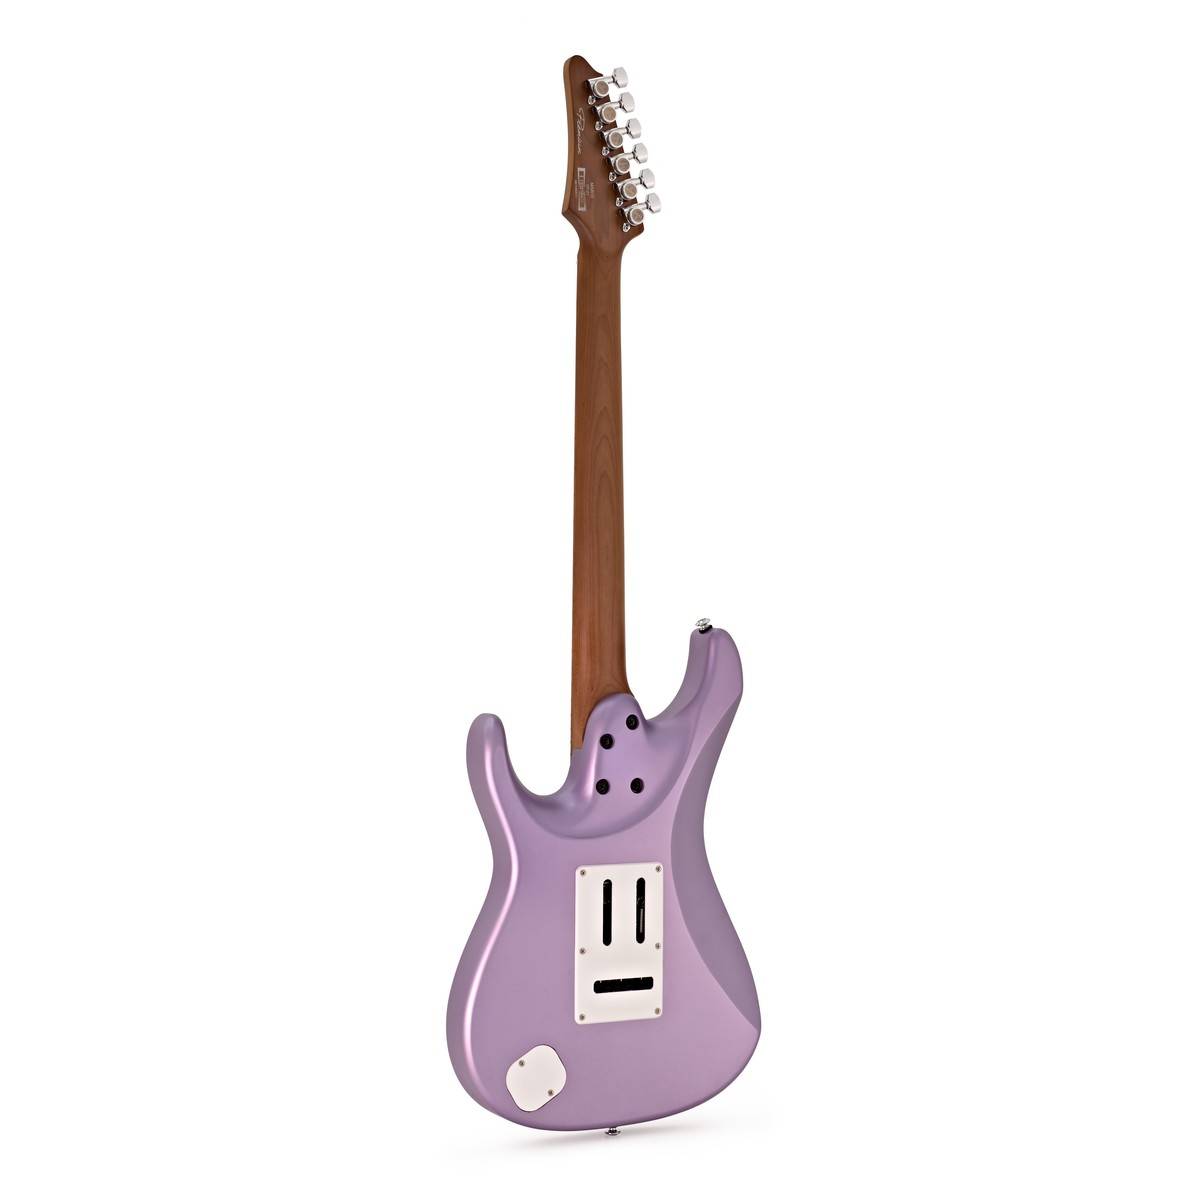 Ibanez Mario Camarena Mar10 Lmm Premium Signature Hss Trem Mn +housse - Lavender Metallic Matte - Str shape electric guitar - Variation 1